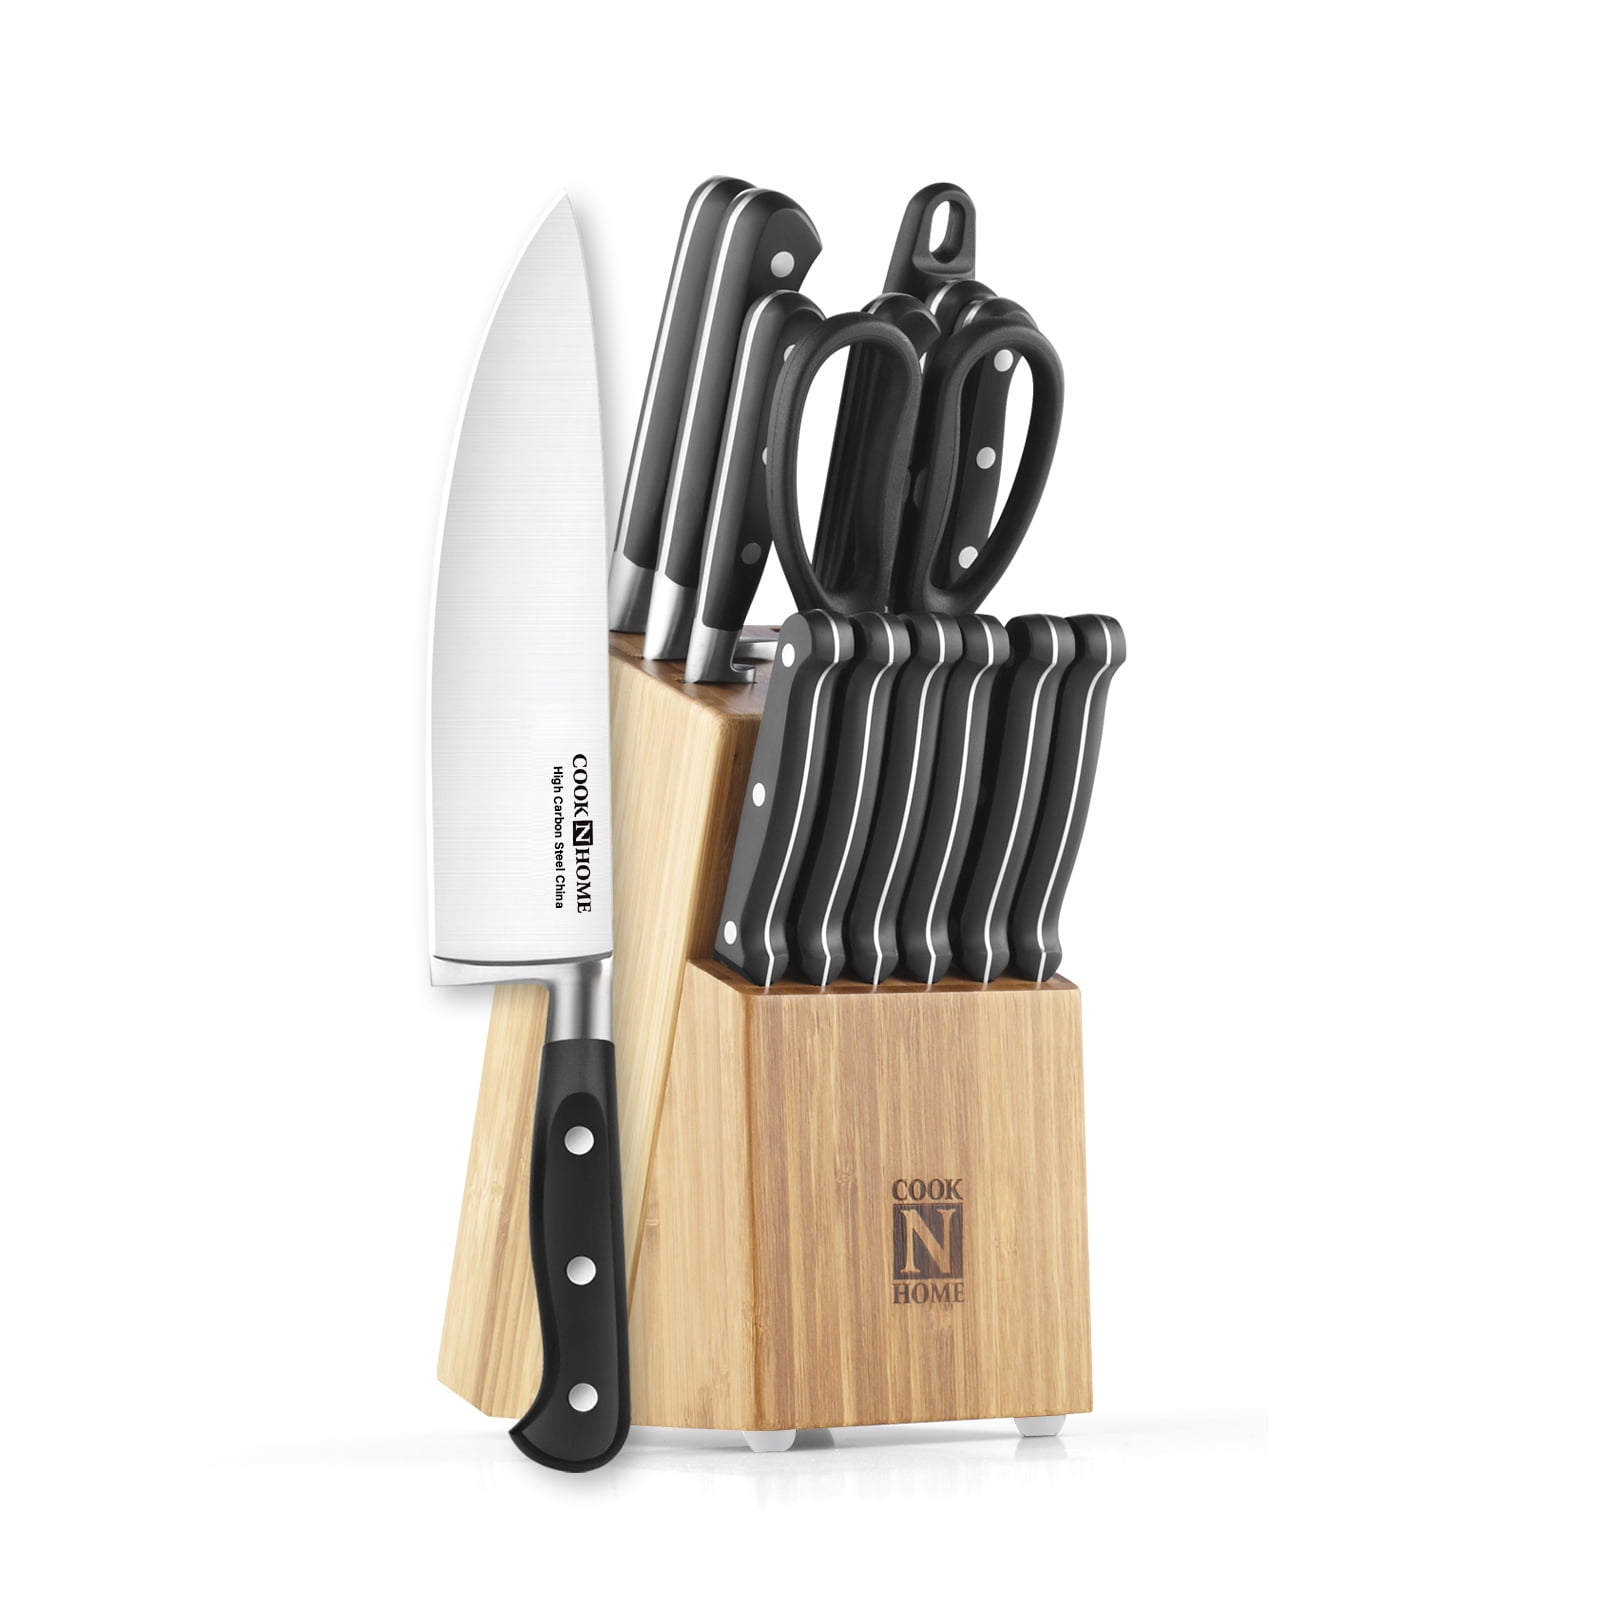 CN-015 Cucina Napoli 15 Piece Premium Cooking Knife Set